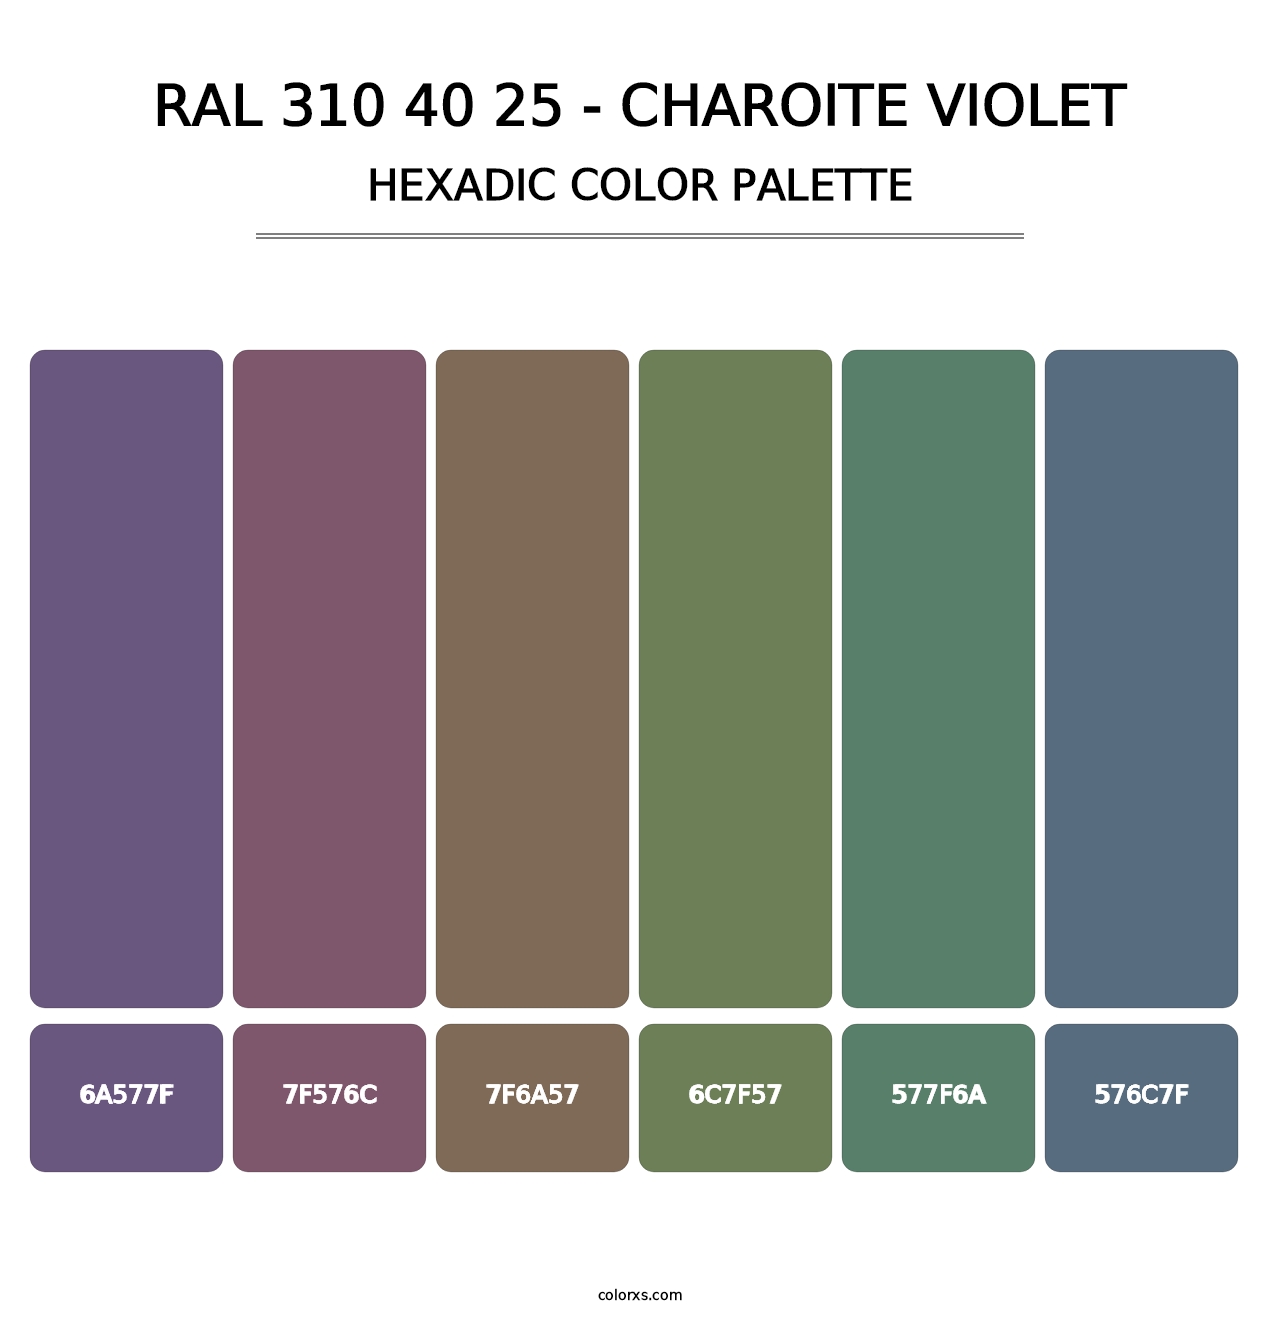 RAL 310 40 25 - Charoite Violet - Hexadic Color Palette